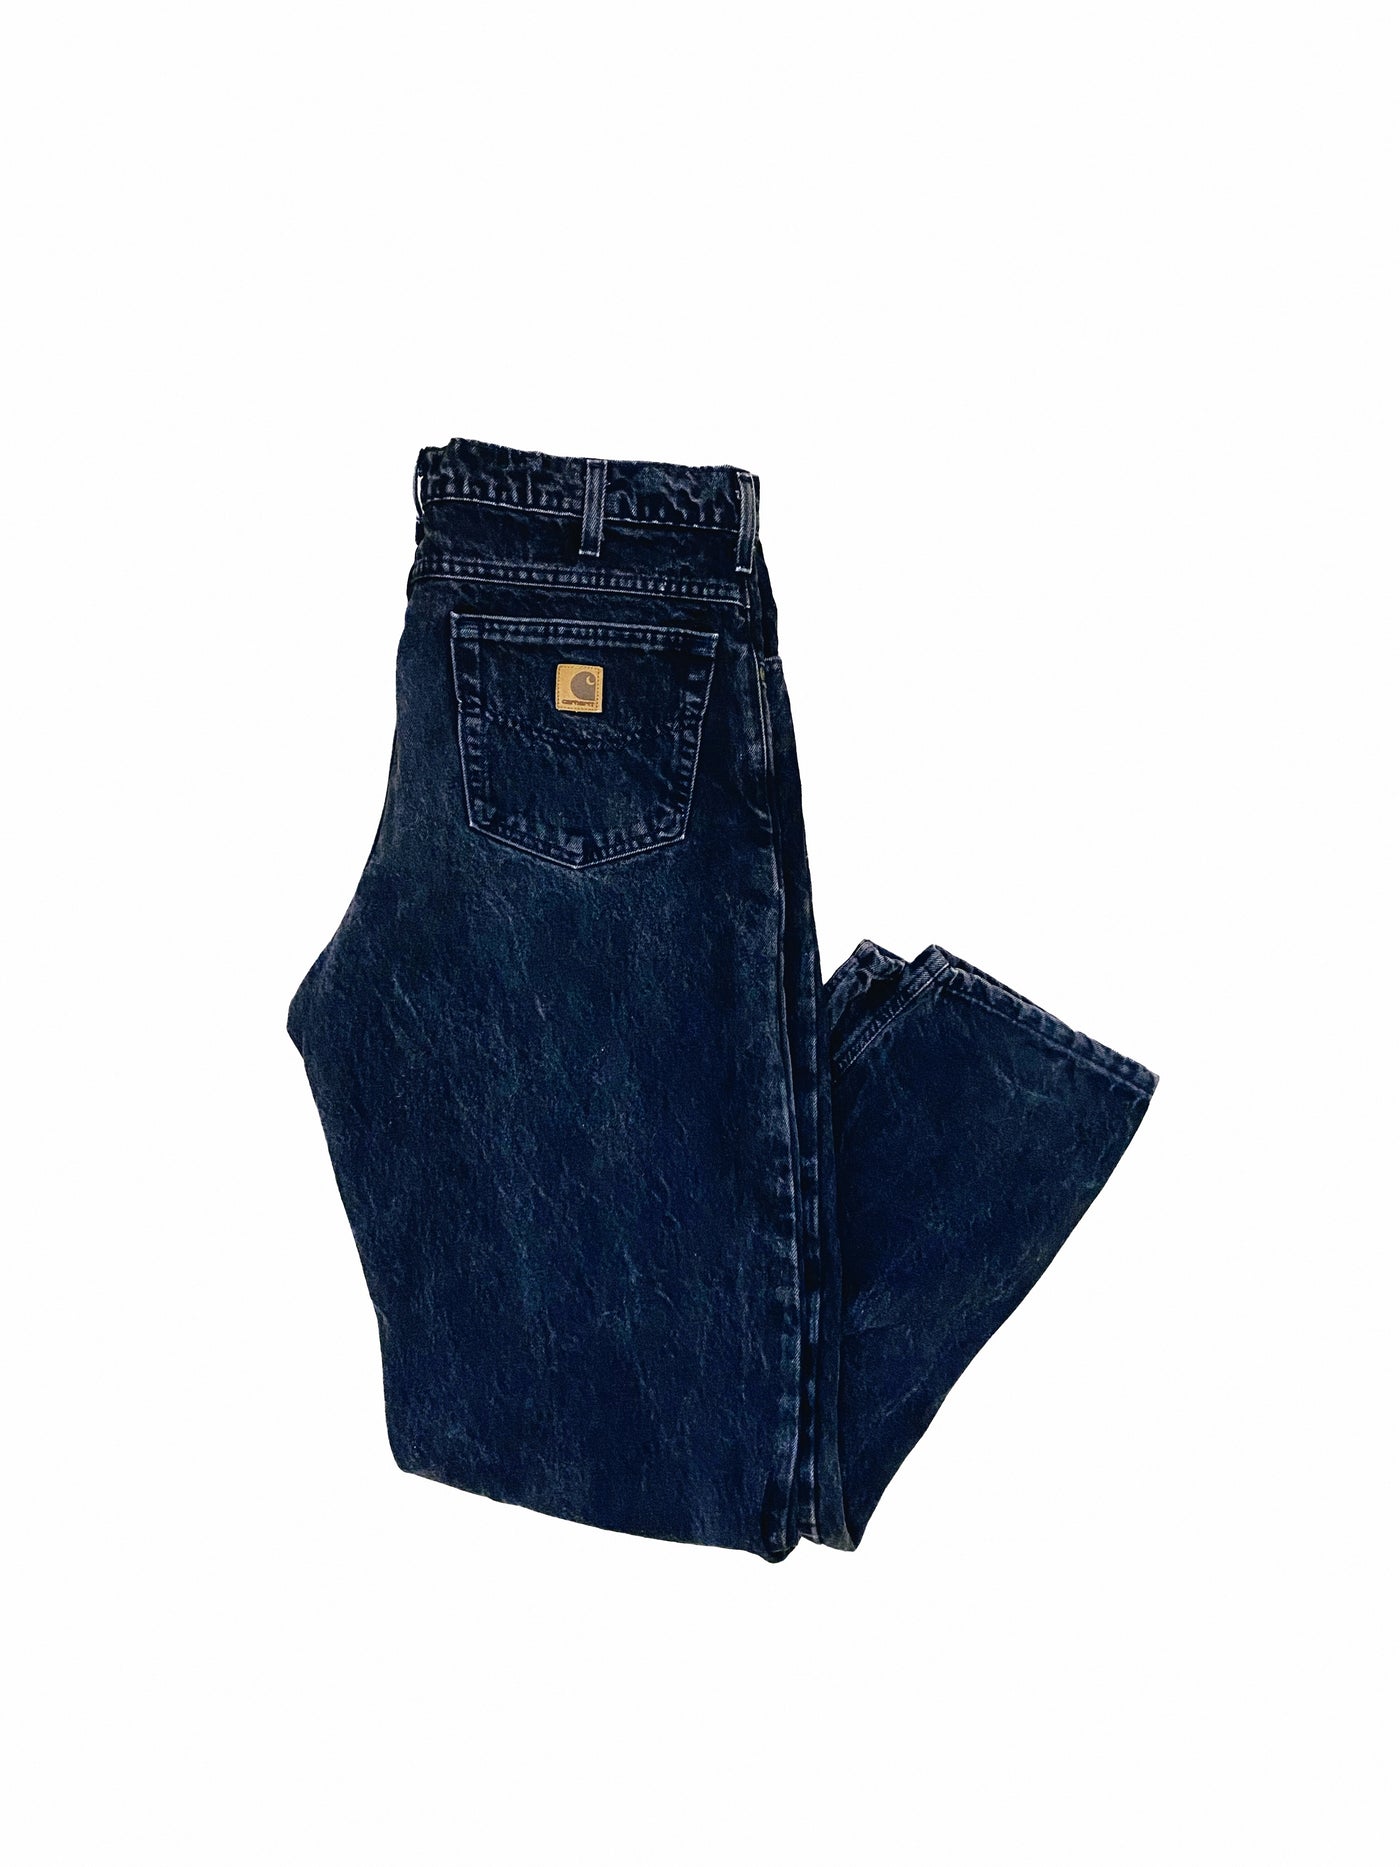 Vintage 90s Carhartt Jeans - Black